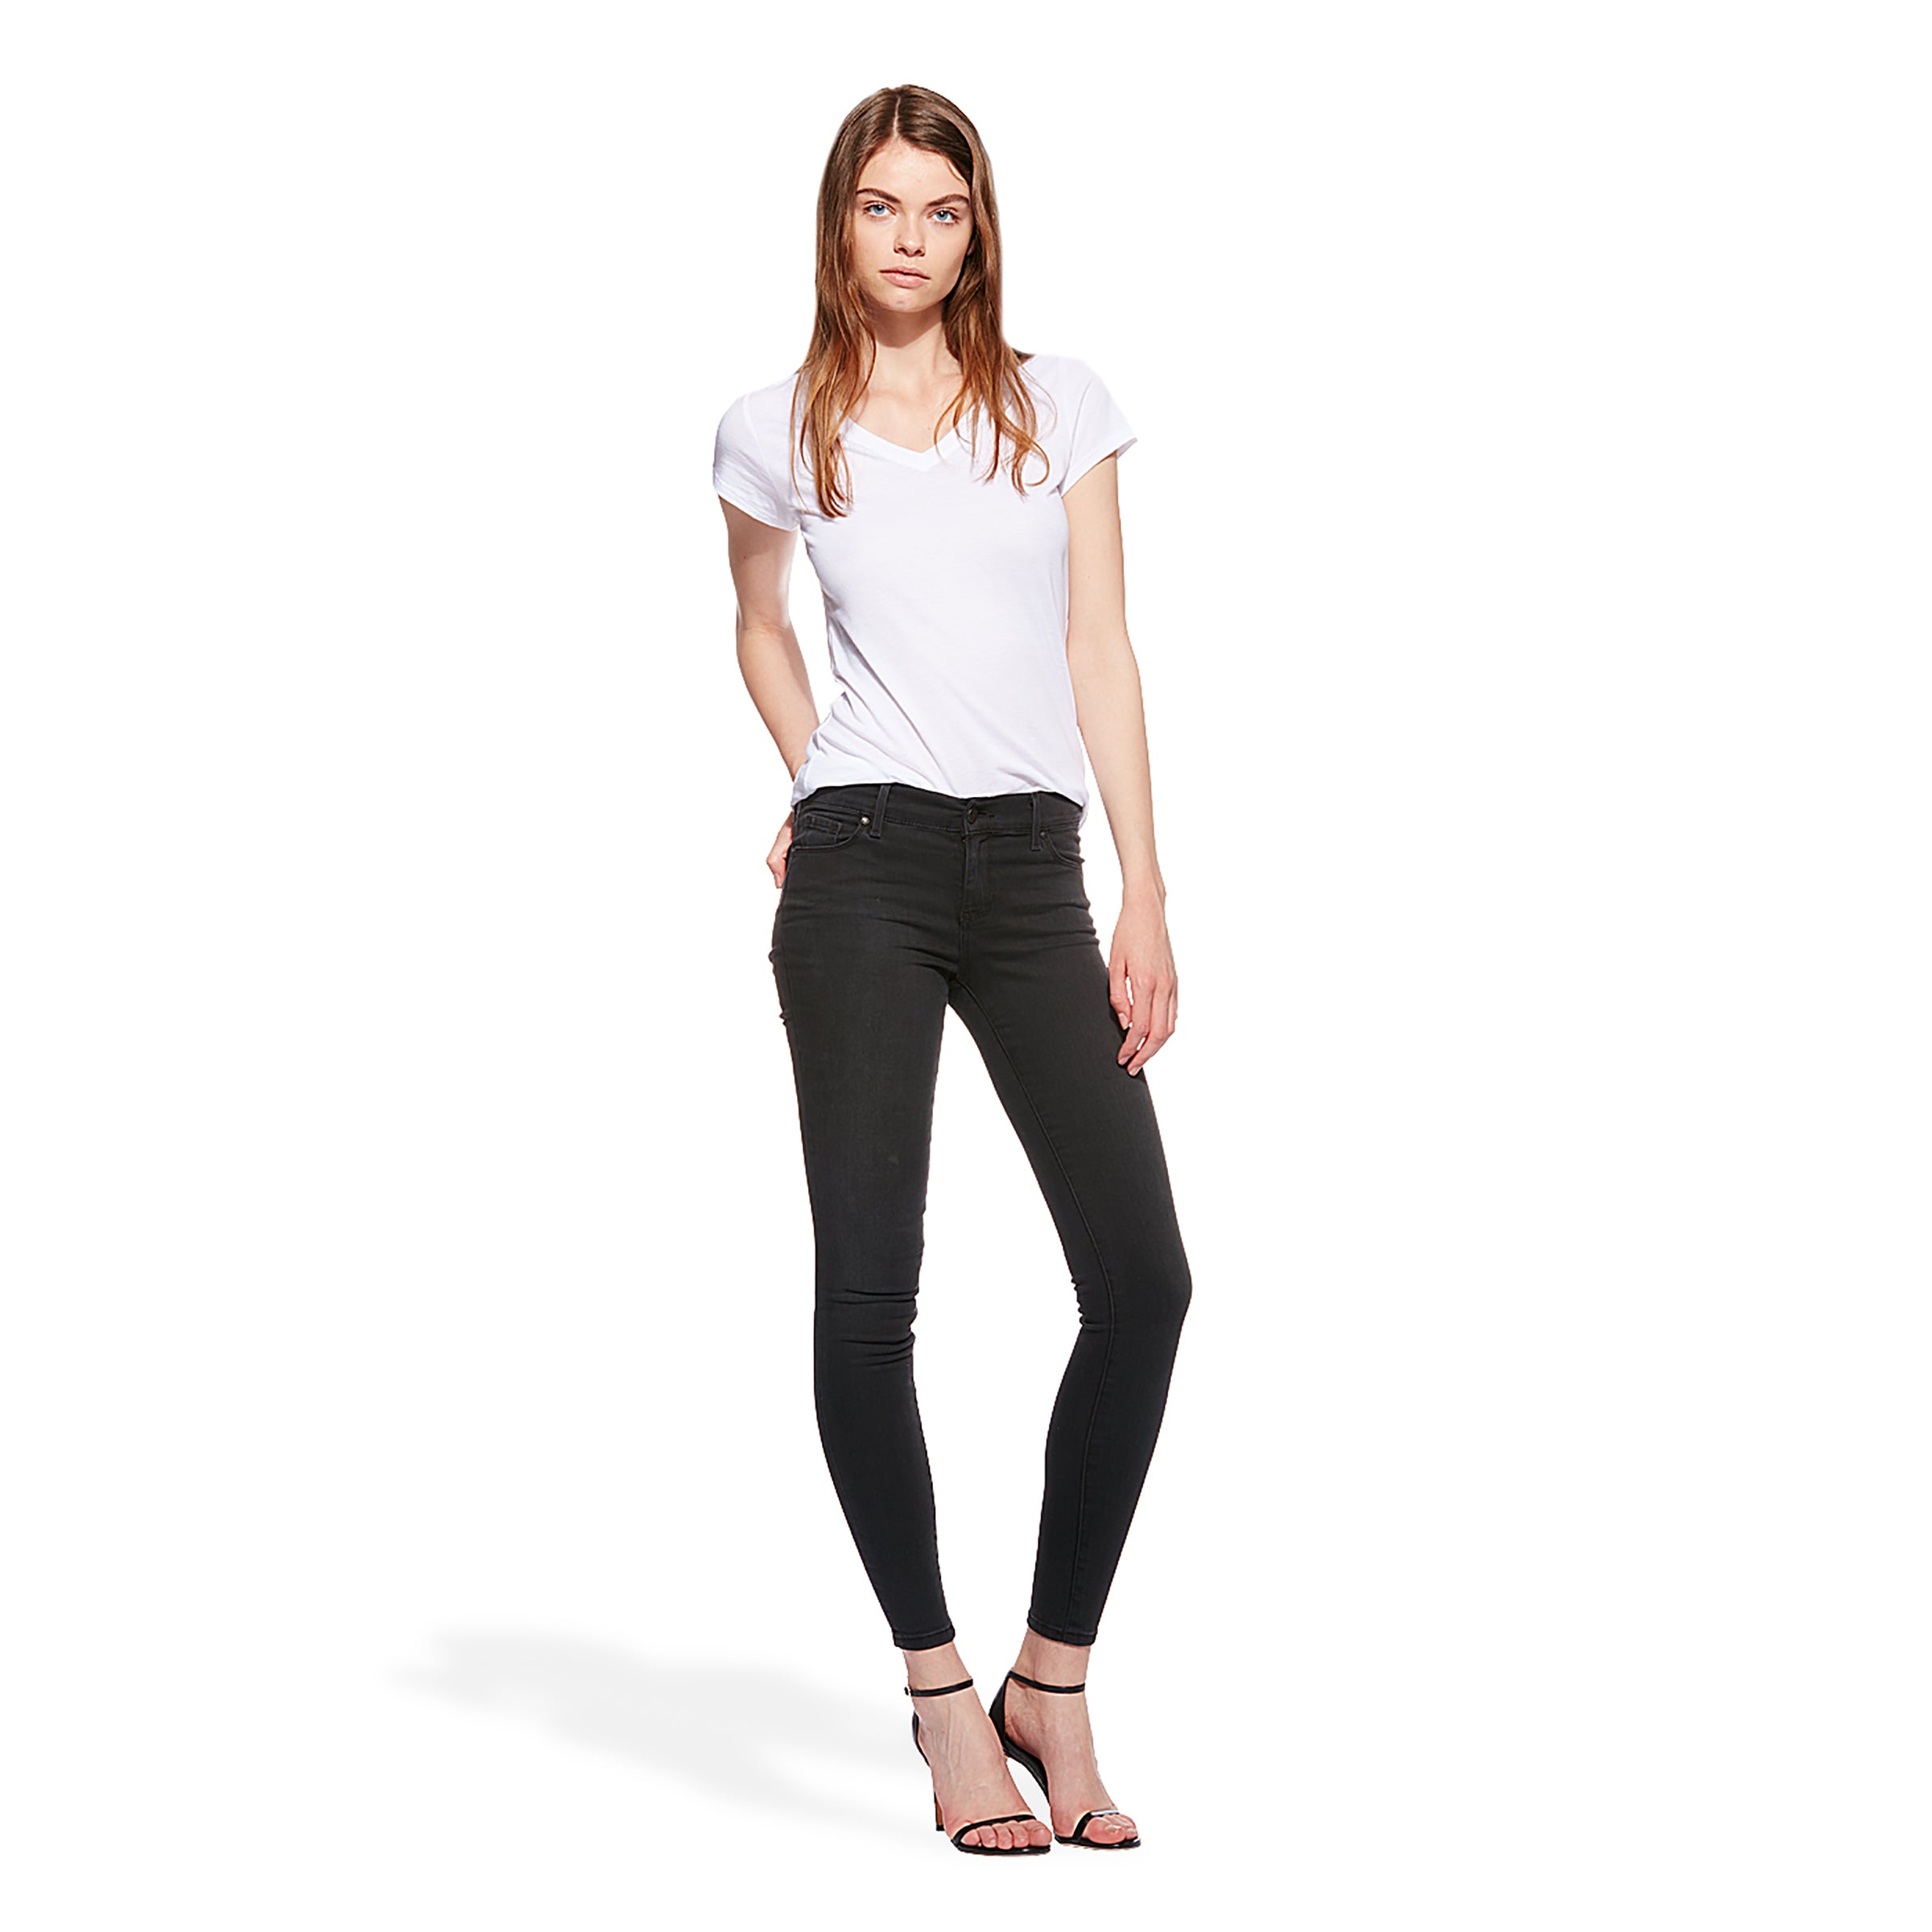 Women wearing Gris foncé Mid Rise Skinny Orchard Jeans